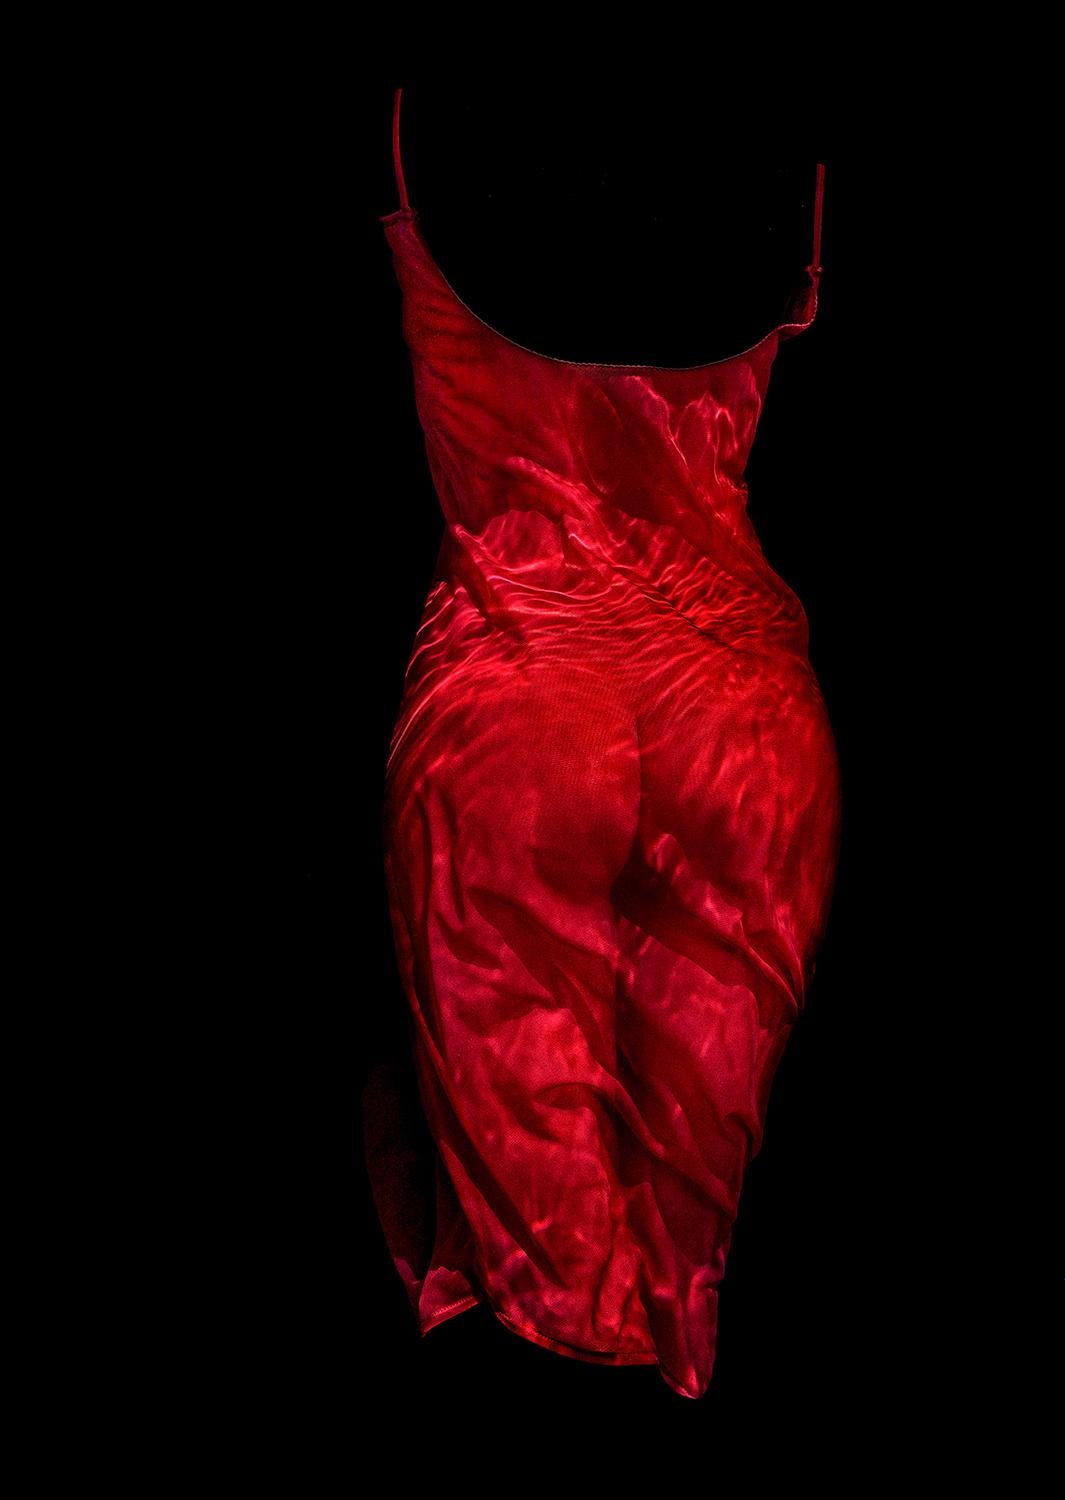 Merlot 2017 - underwater nude photograph - archival pigment print 35